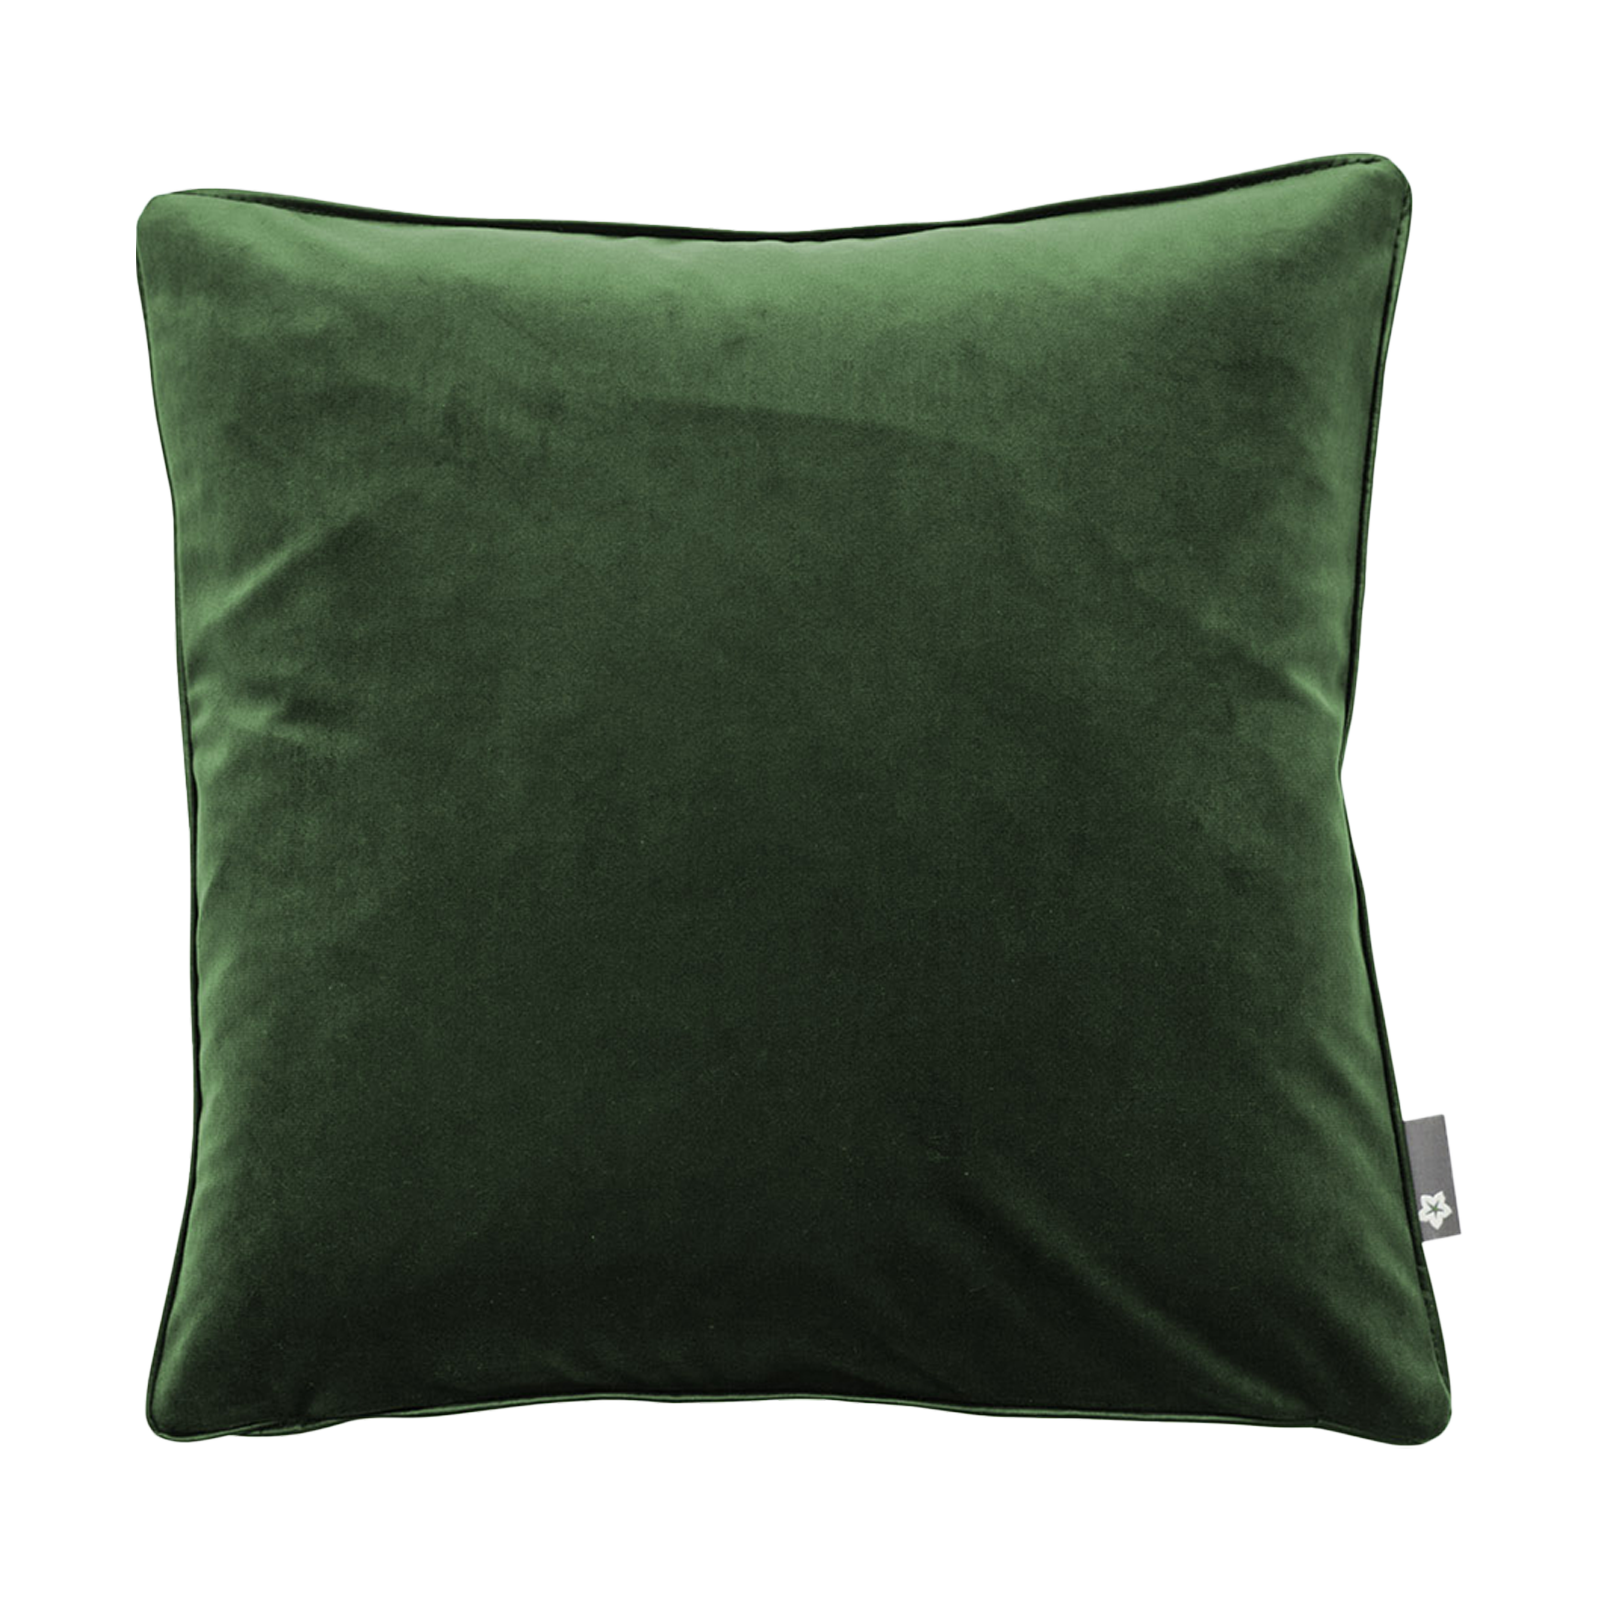 Größe: 51x 51 cm Farbe: grasgrün #farbe_grasgrün